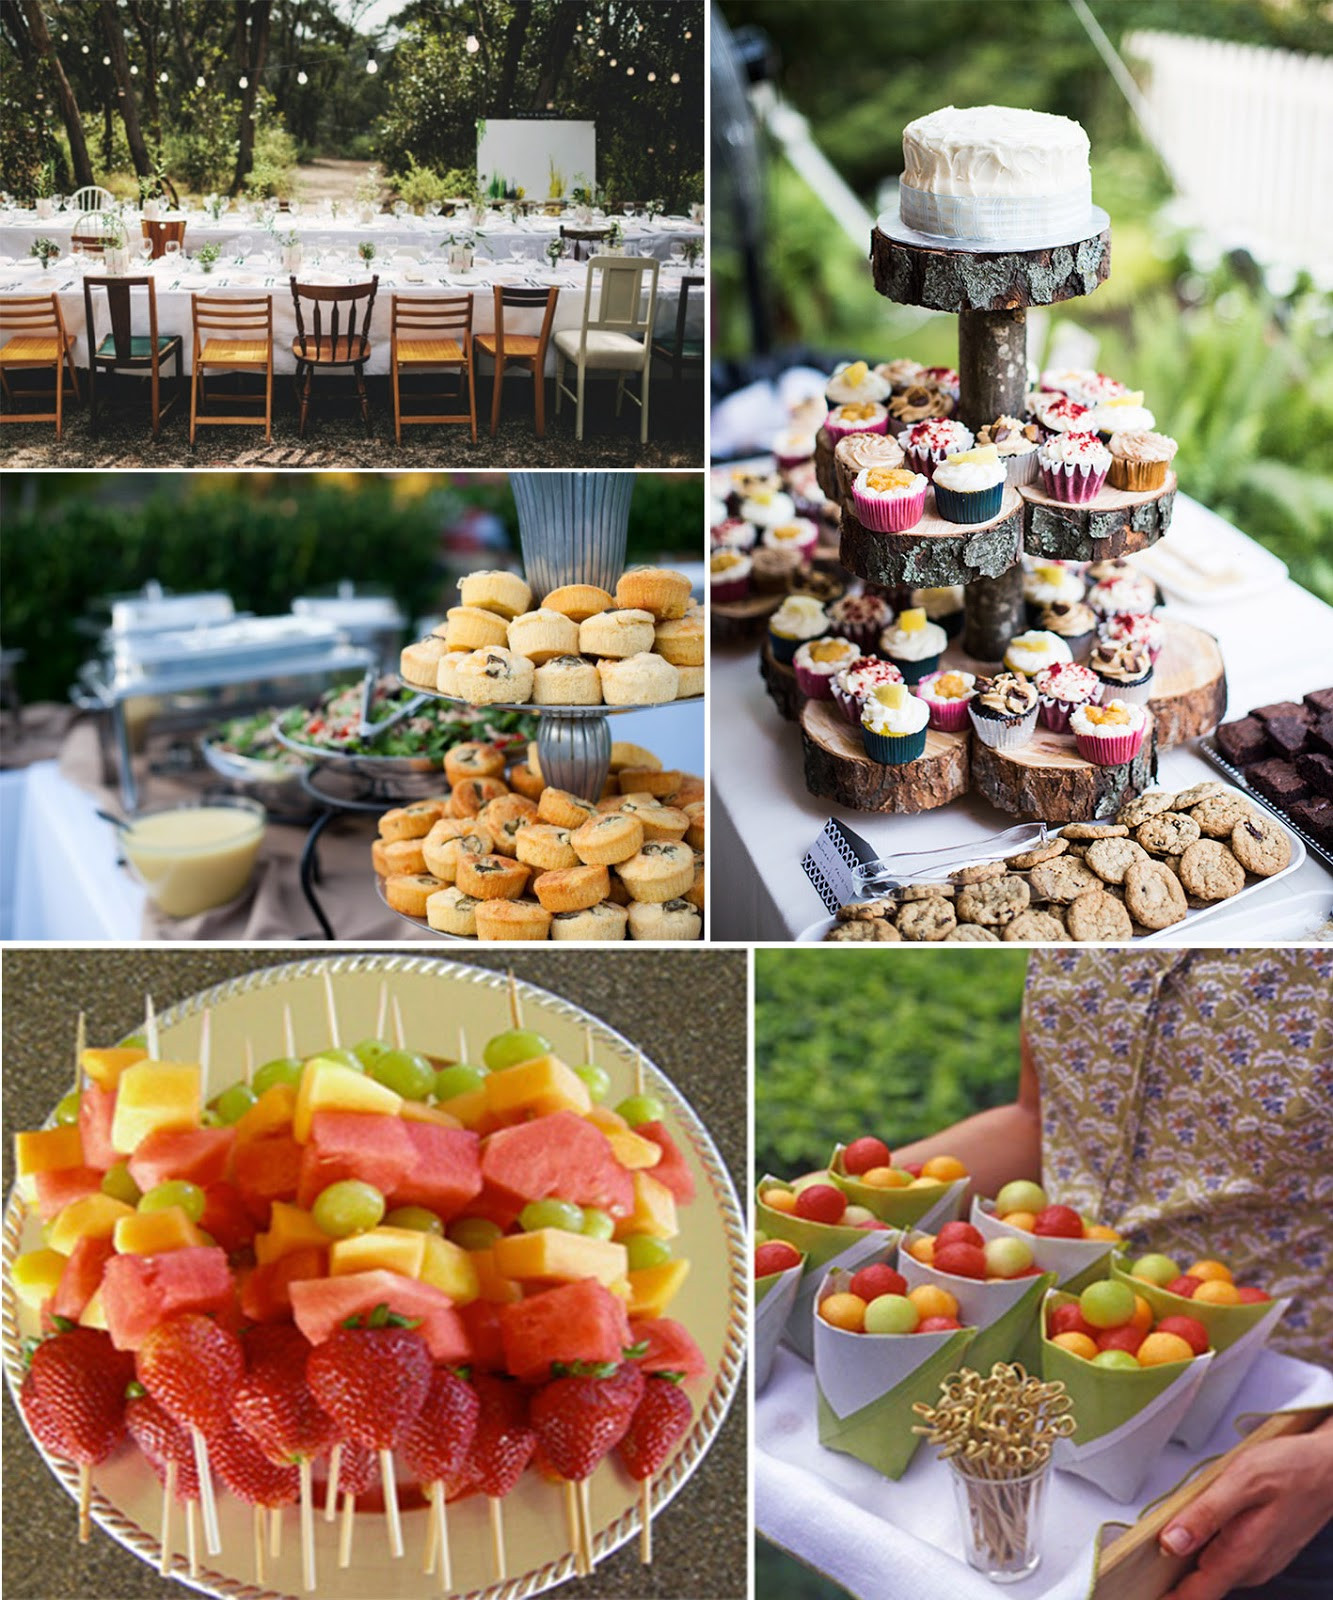 Backyard Party Menu Ideas
 prom dress How to plan a backyard themed wedding